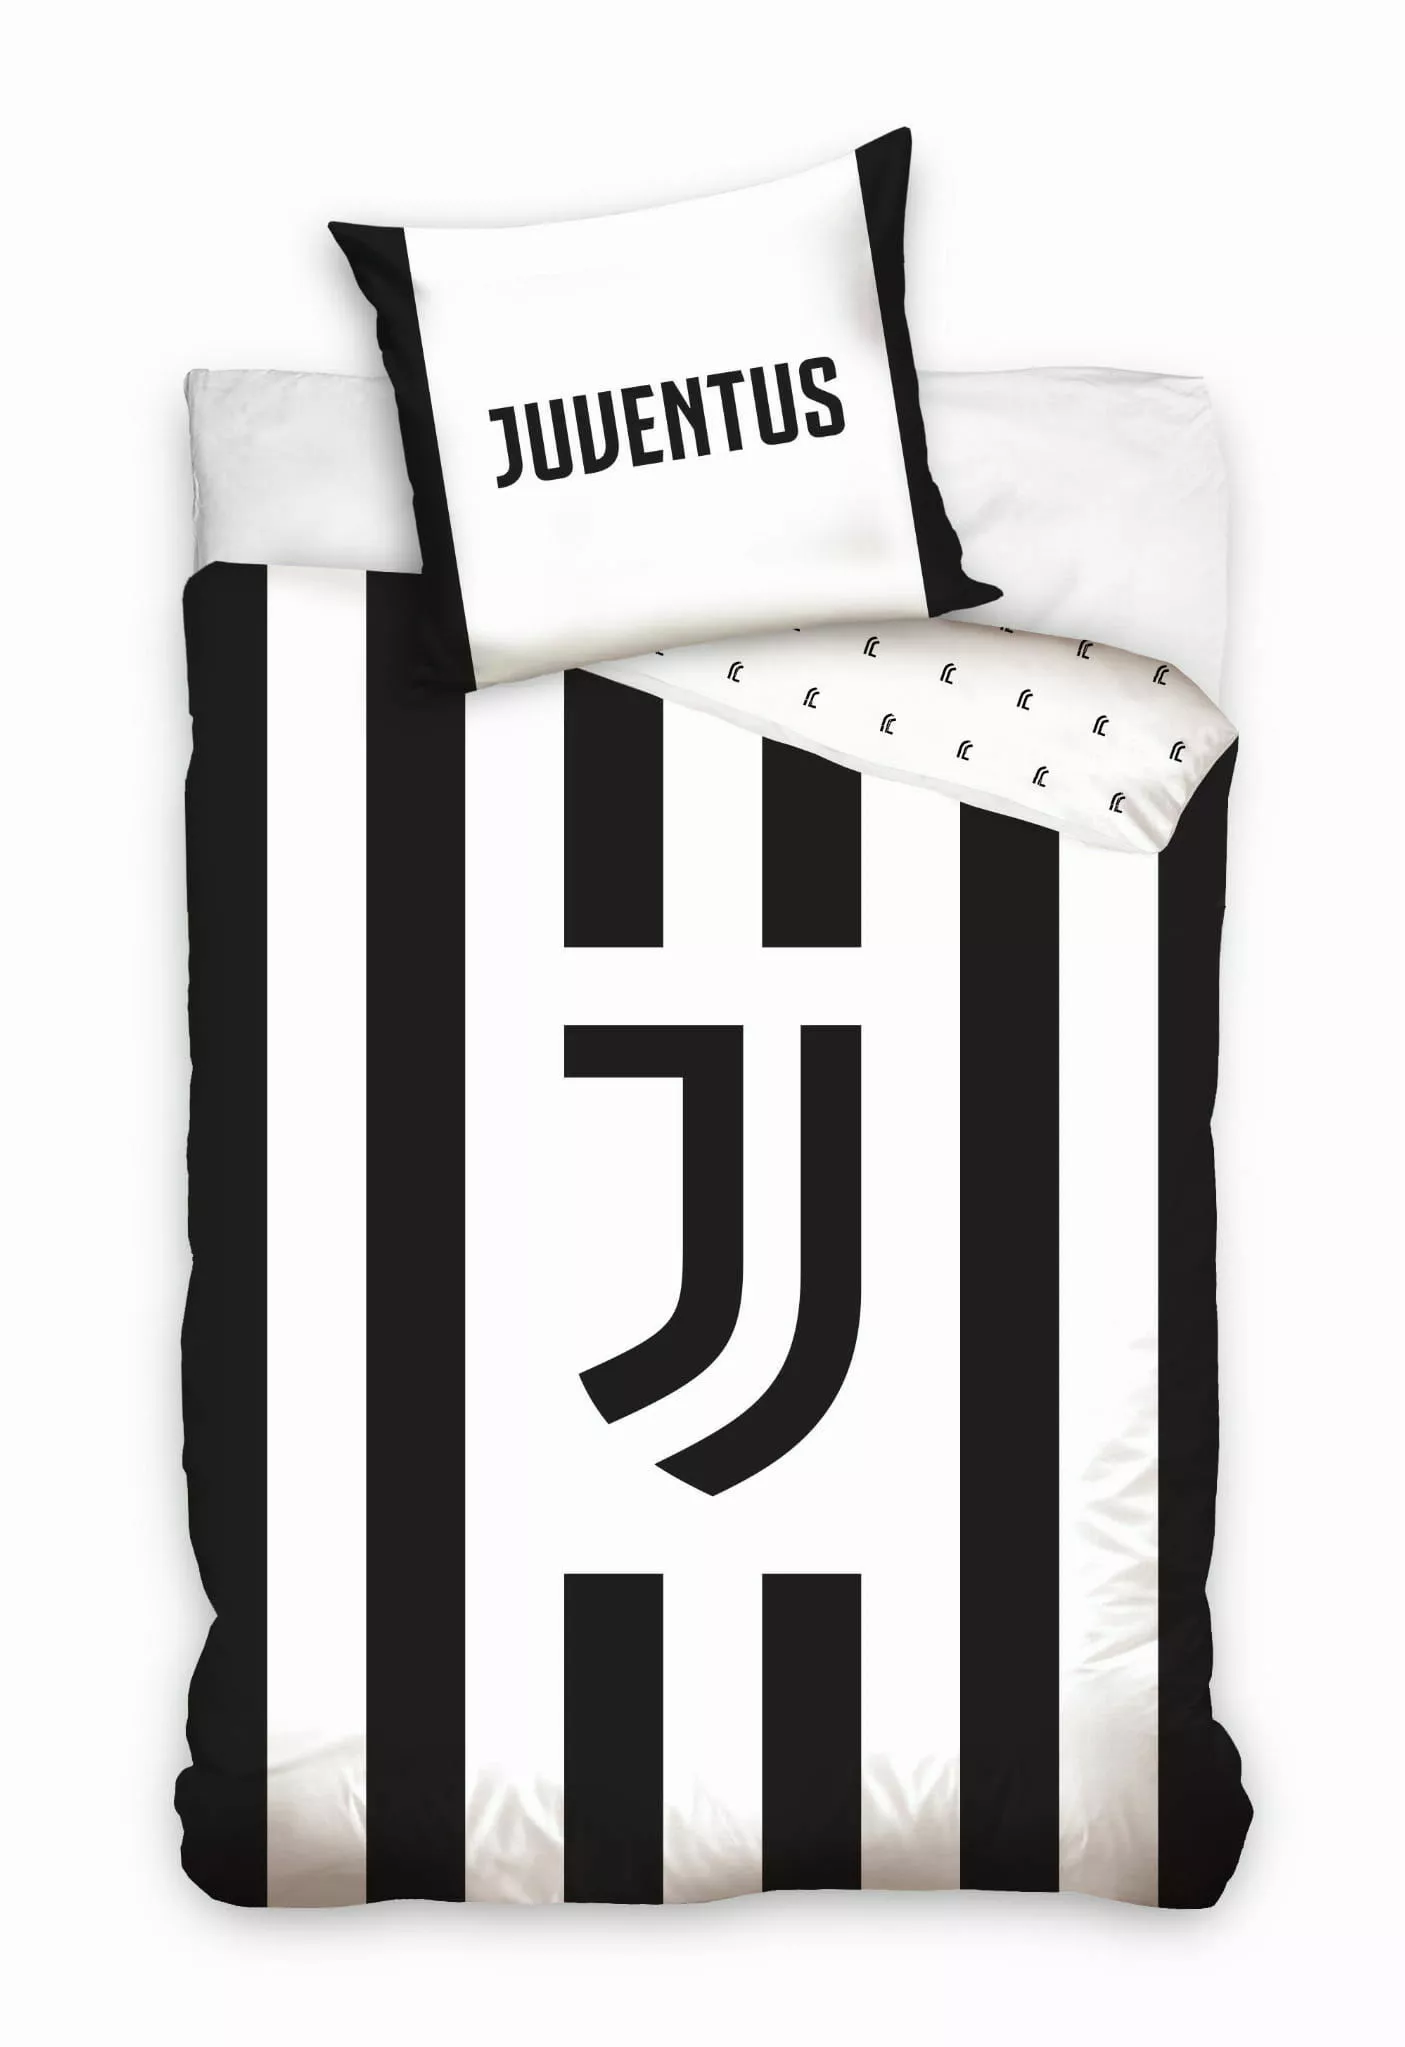 Juventus Turyn gadżety